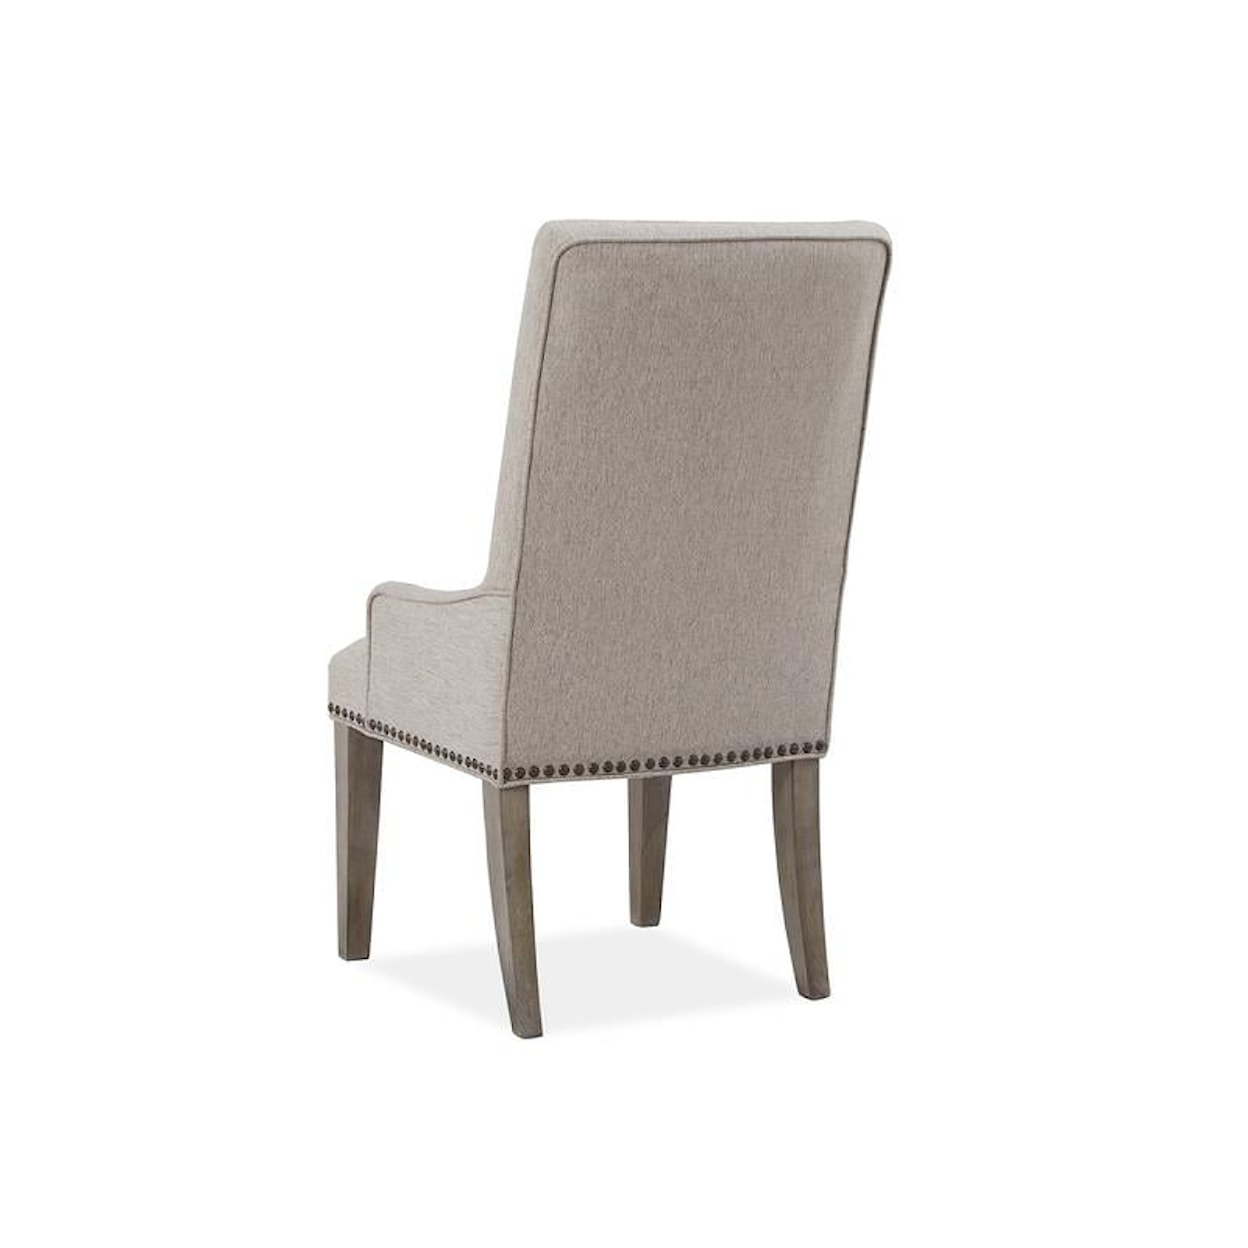 Magnussen Home Tinley Park Dining Upholstered Host Side Chair